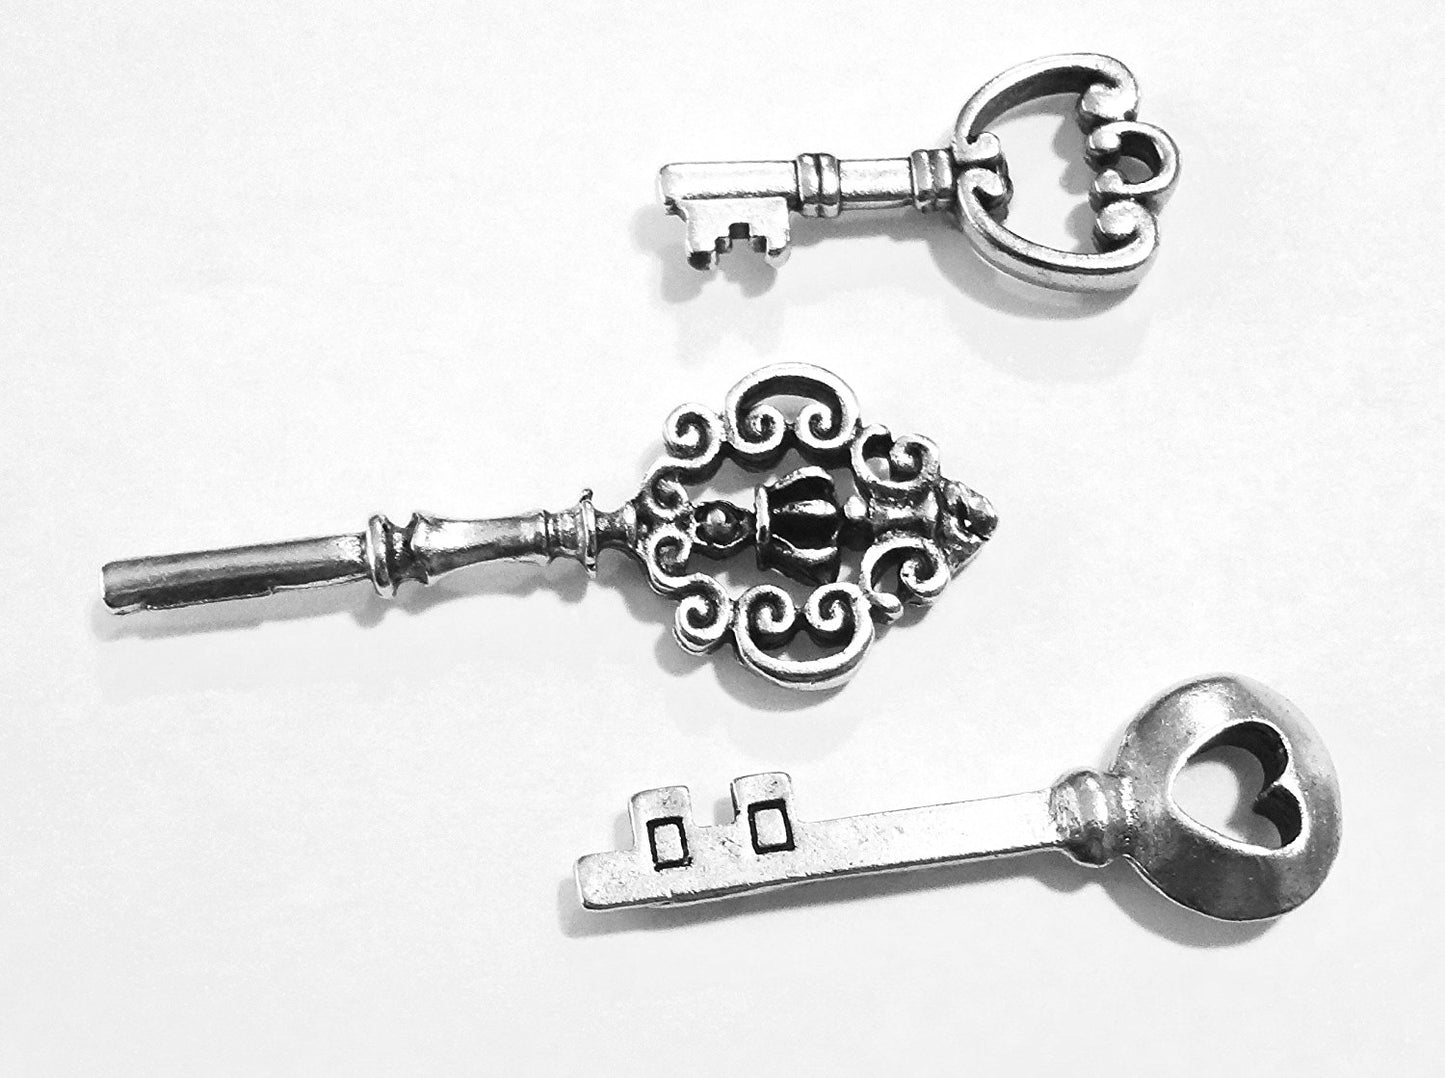 Vintage Key Push Pins, Decorative Push Pins, Unique Silver Push Pins, 15 Piece Metal Push Pin Set